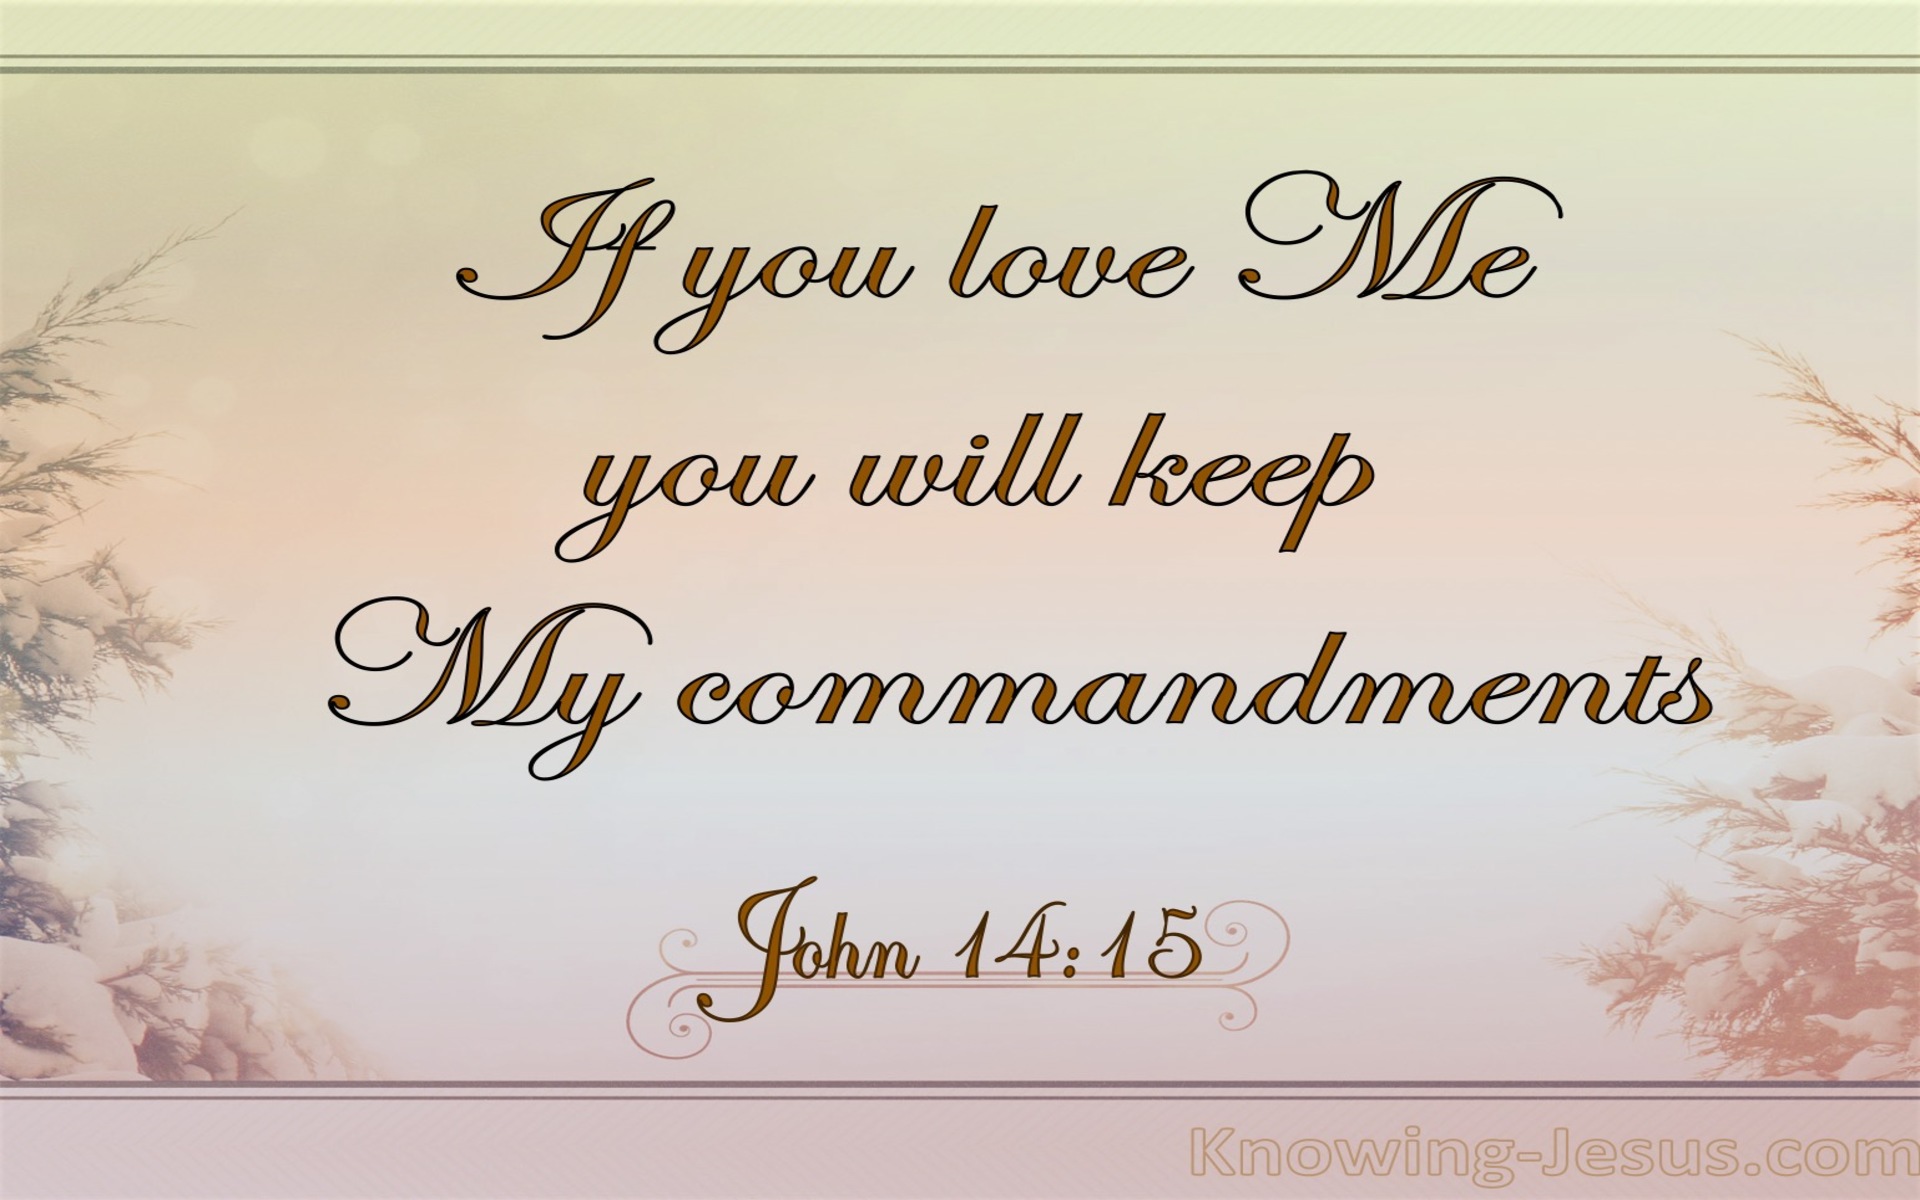 John 14:15 In You Love Me Keep My Commandments (pink)